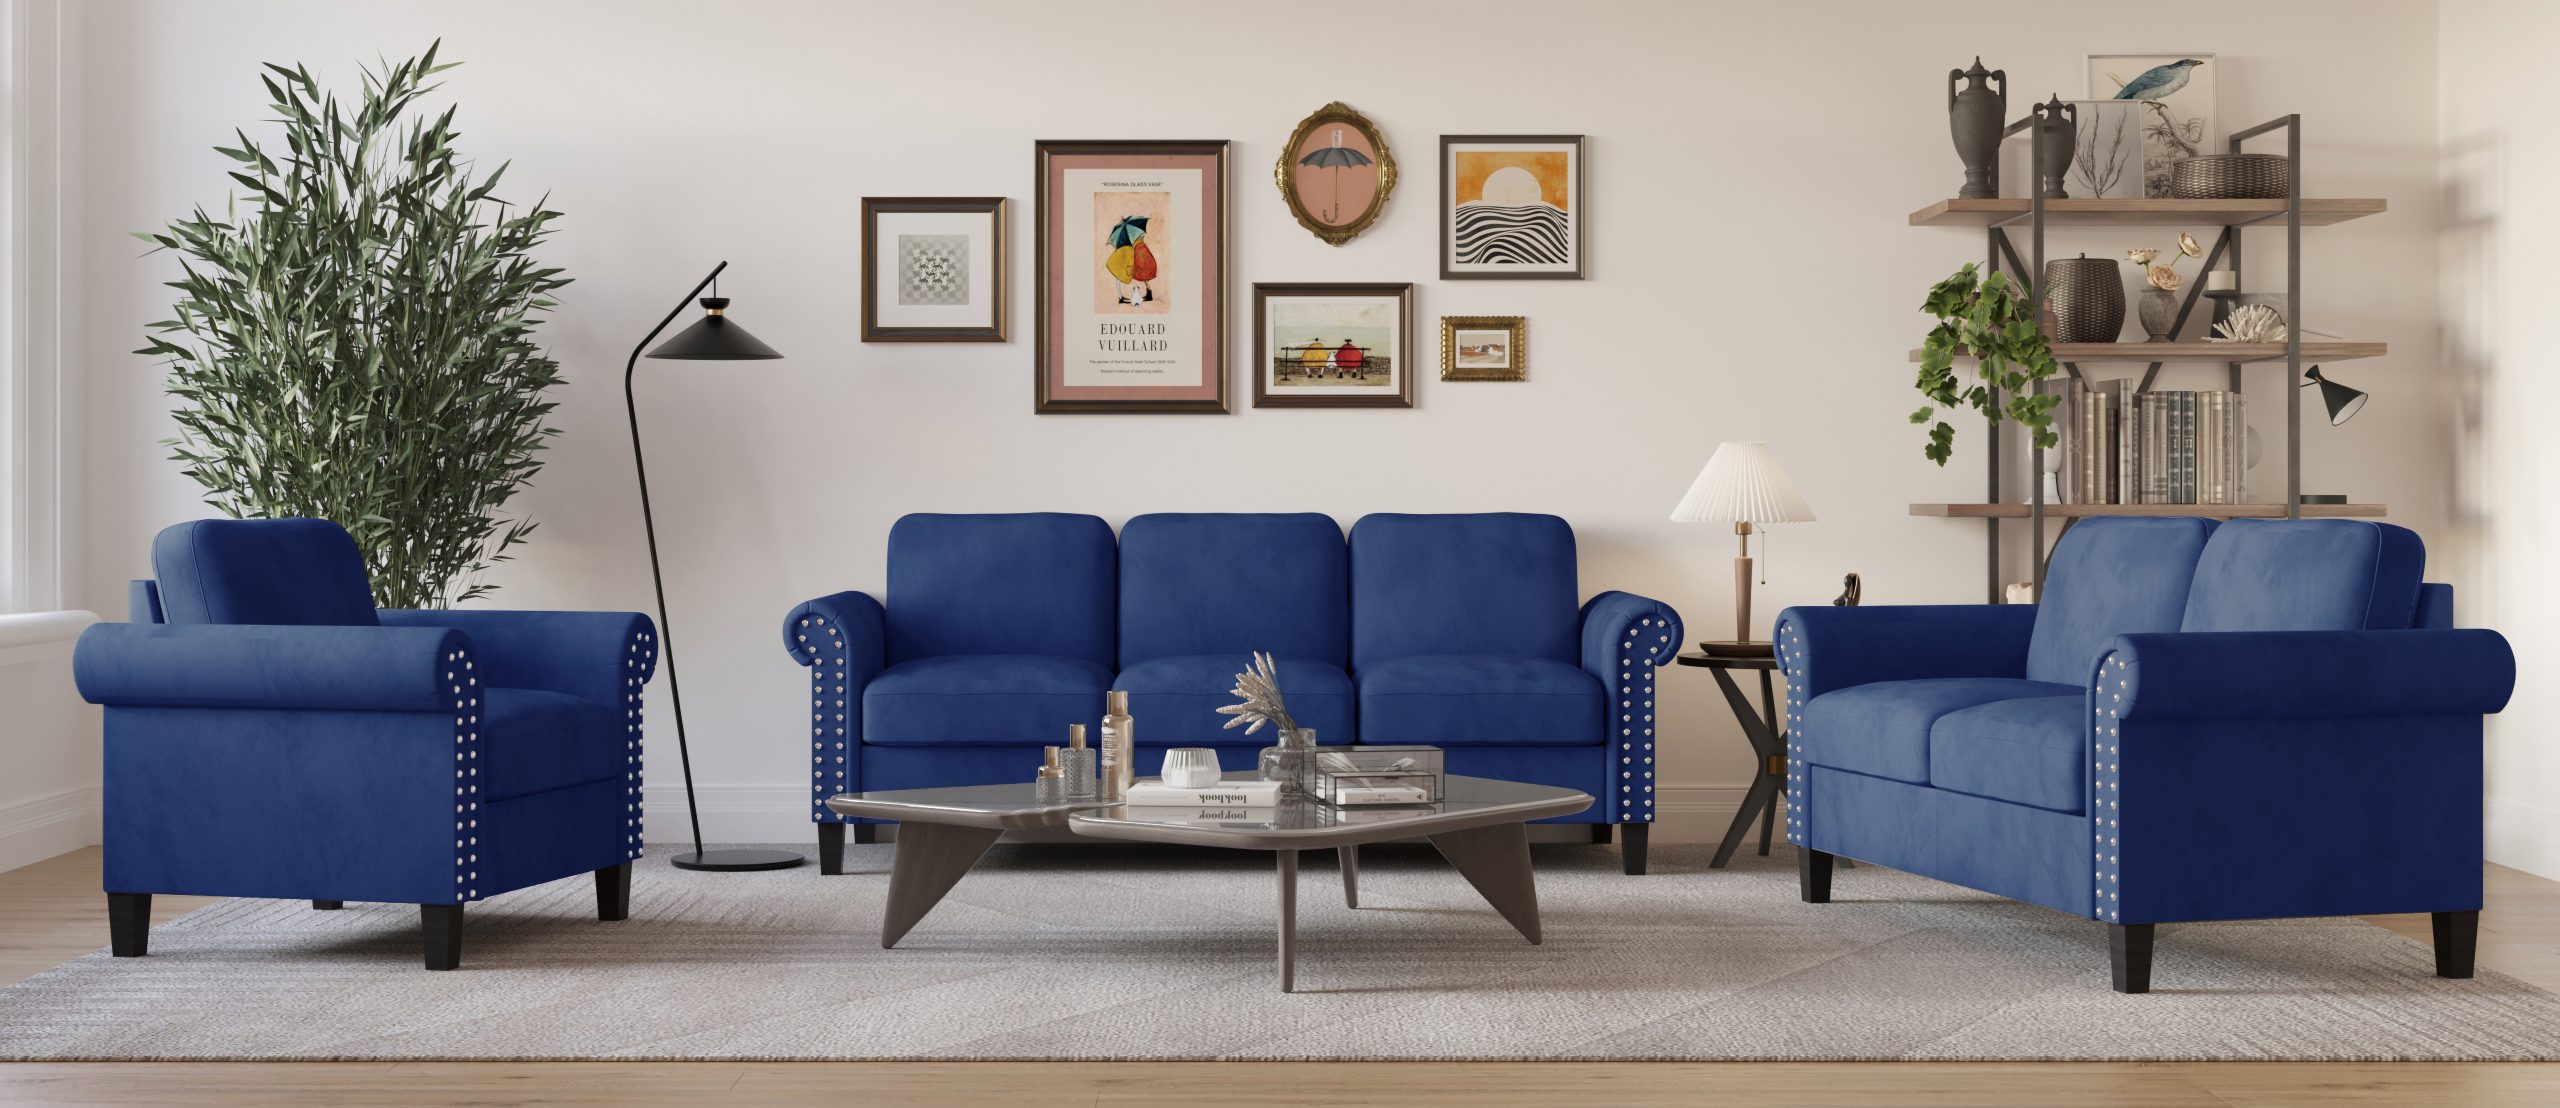 Home - New Classic Furniture